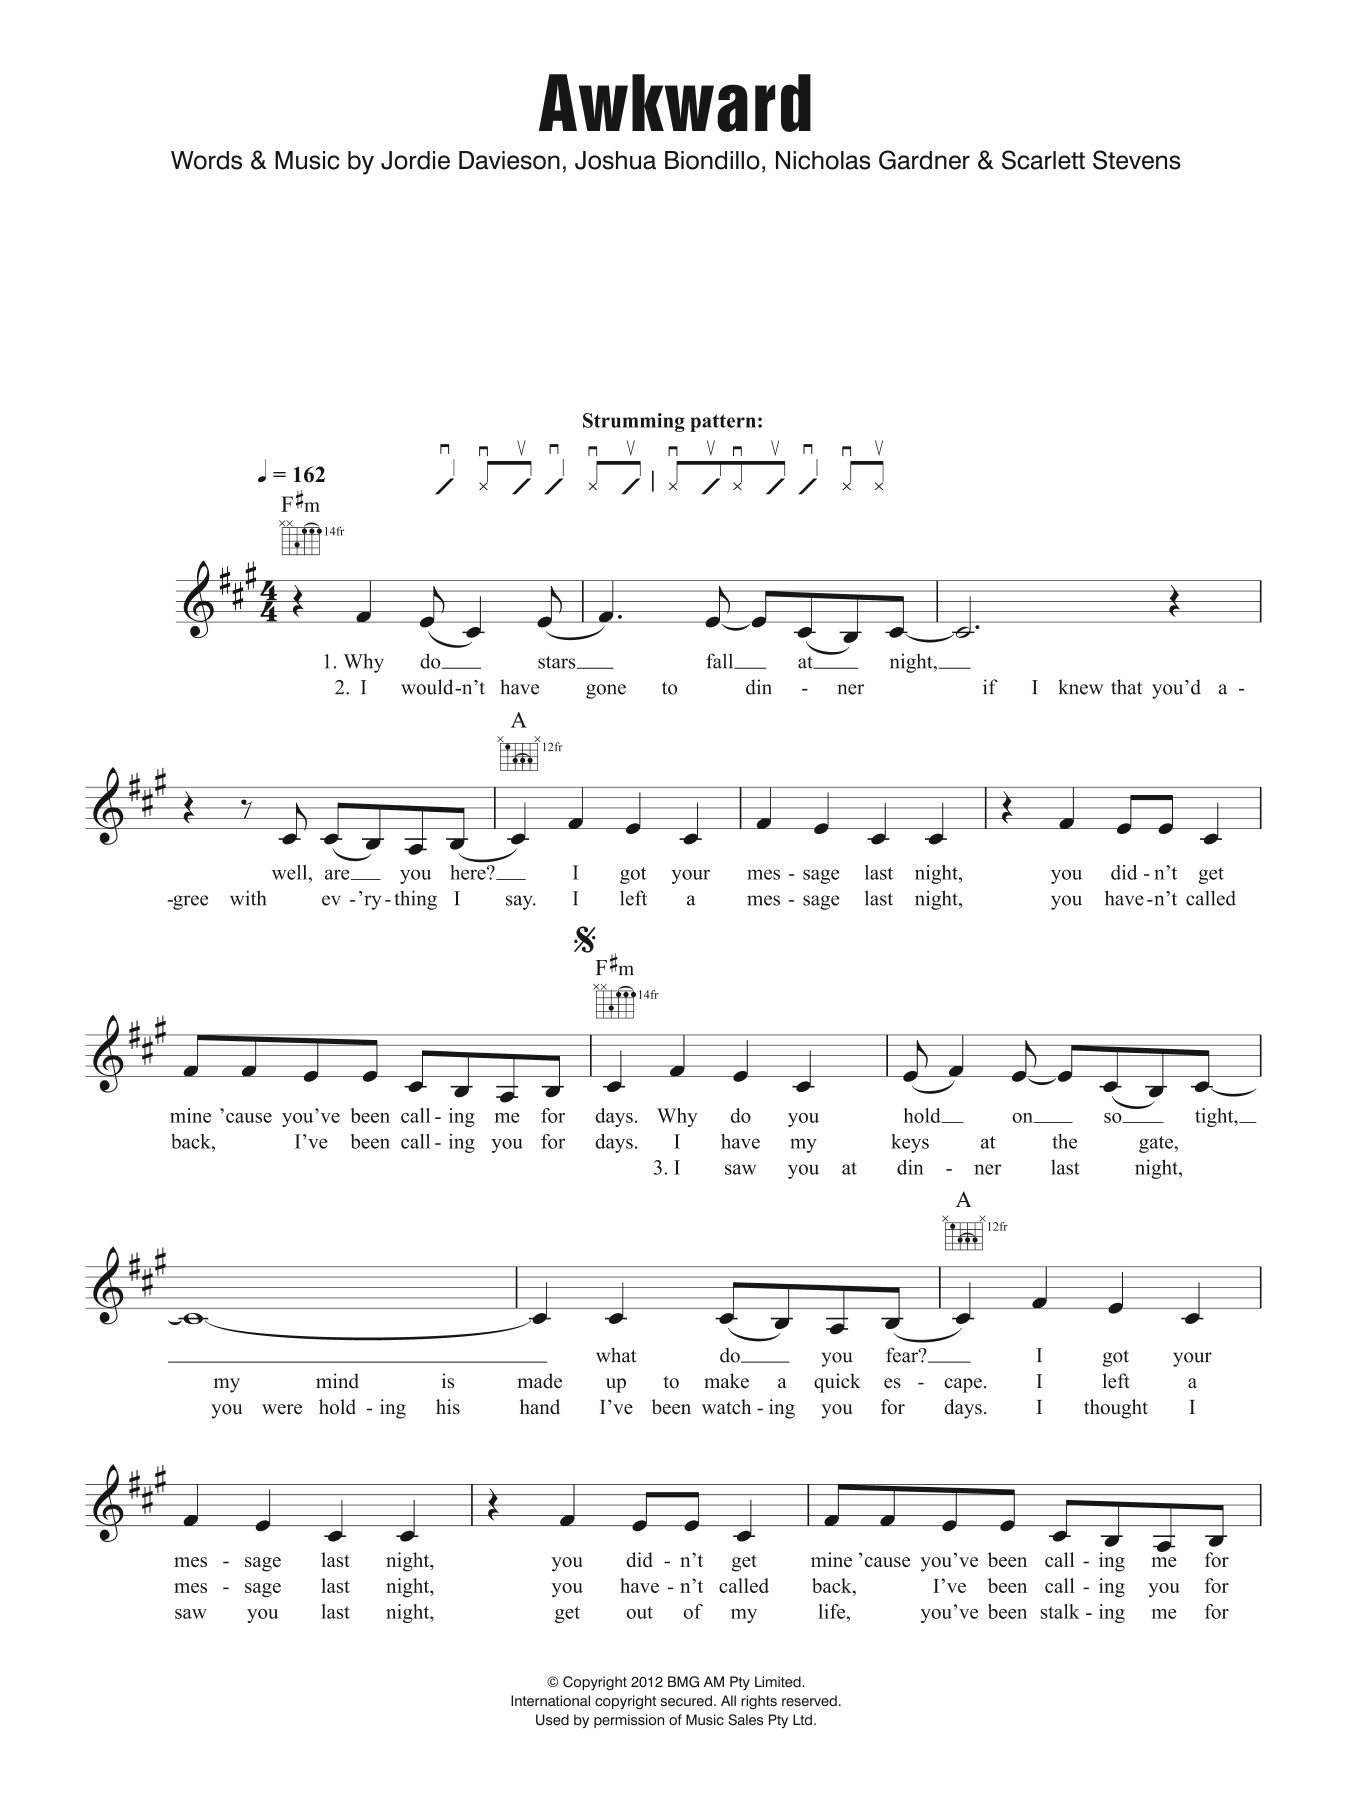 San Cisco Awkward sheet music notes and chords arranged for Lead Sheet / Fake Book